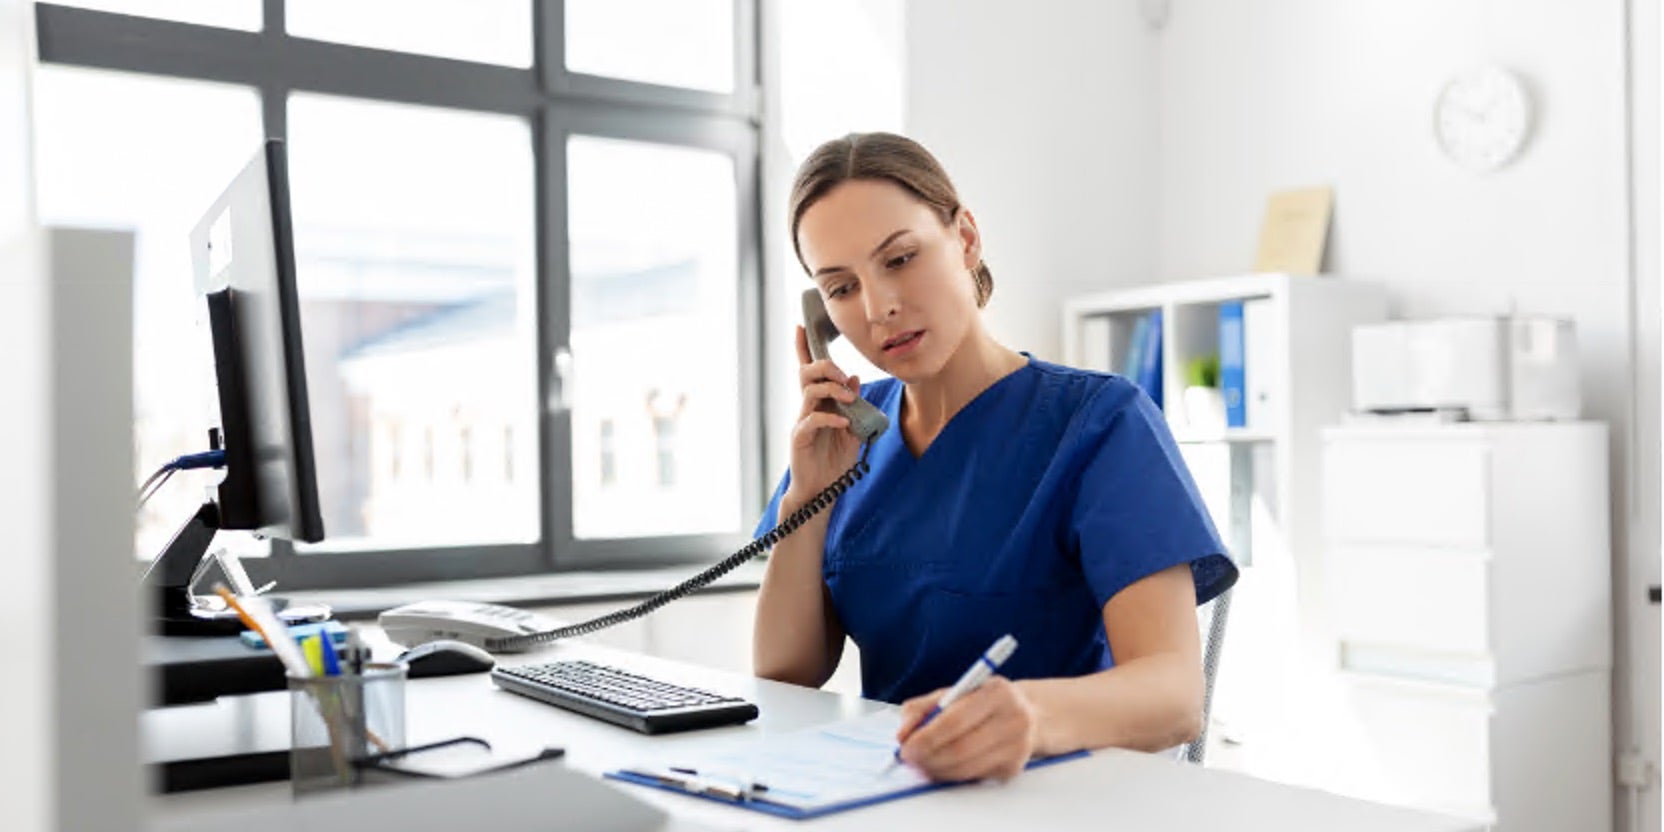 Women in medical uniform answering phone